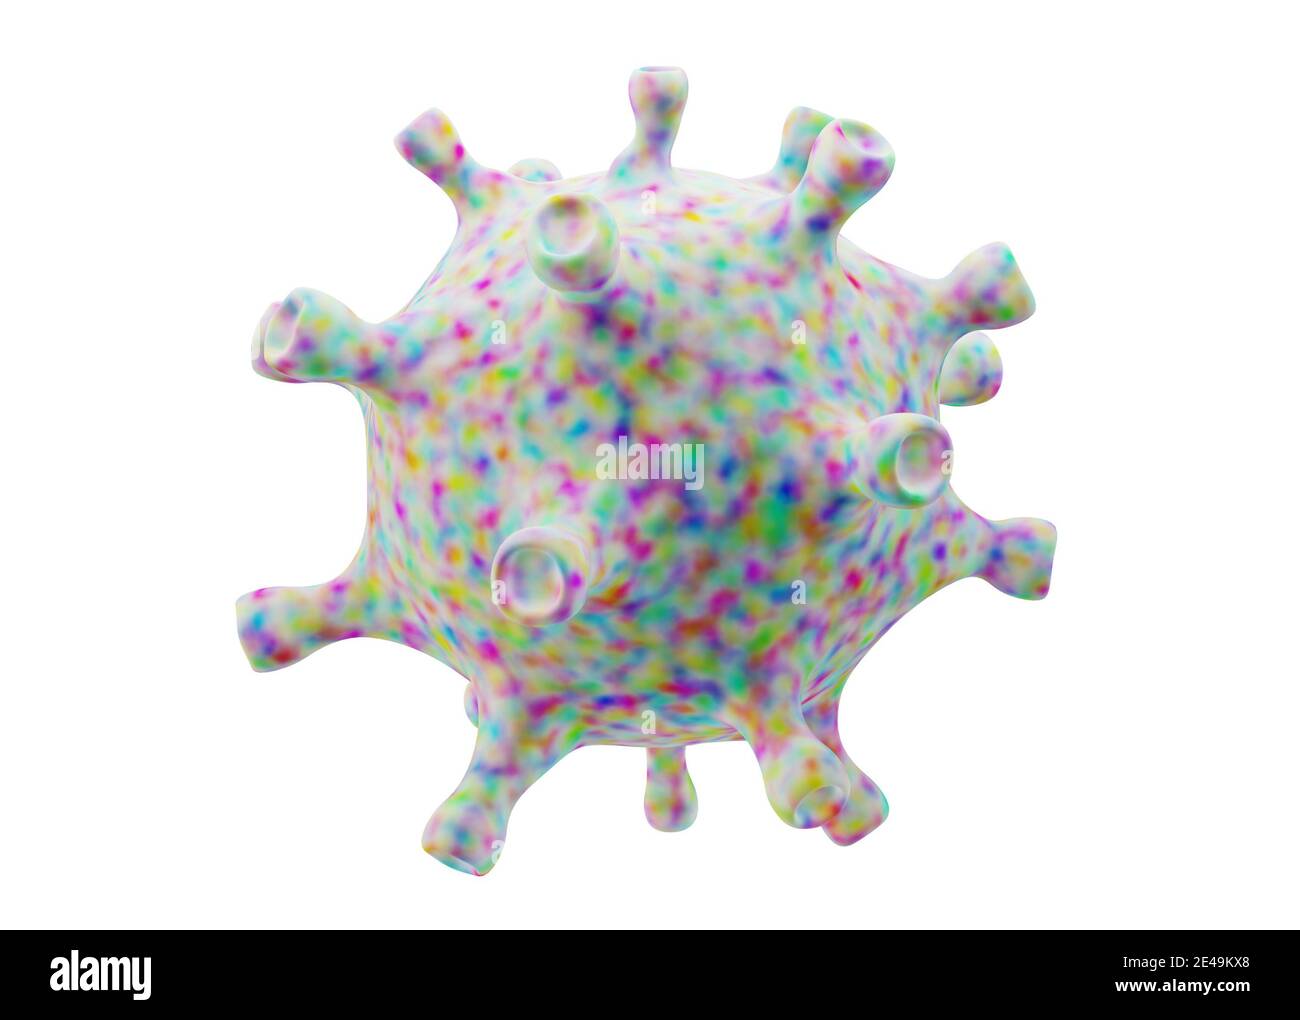 A bright toxic pathogenic virus. COVID-19 concept. 3d illustration Stock Photo